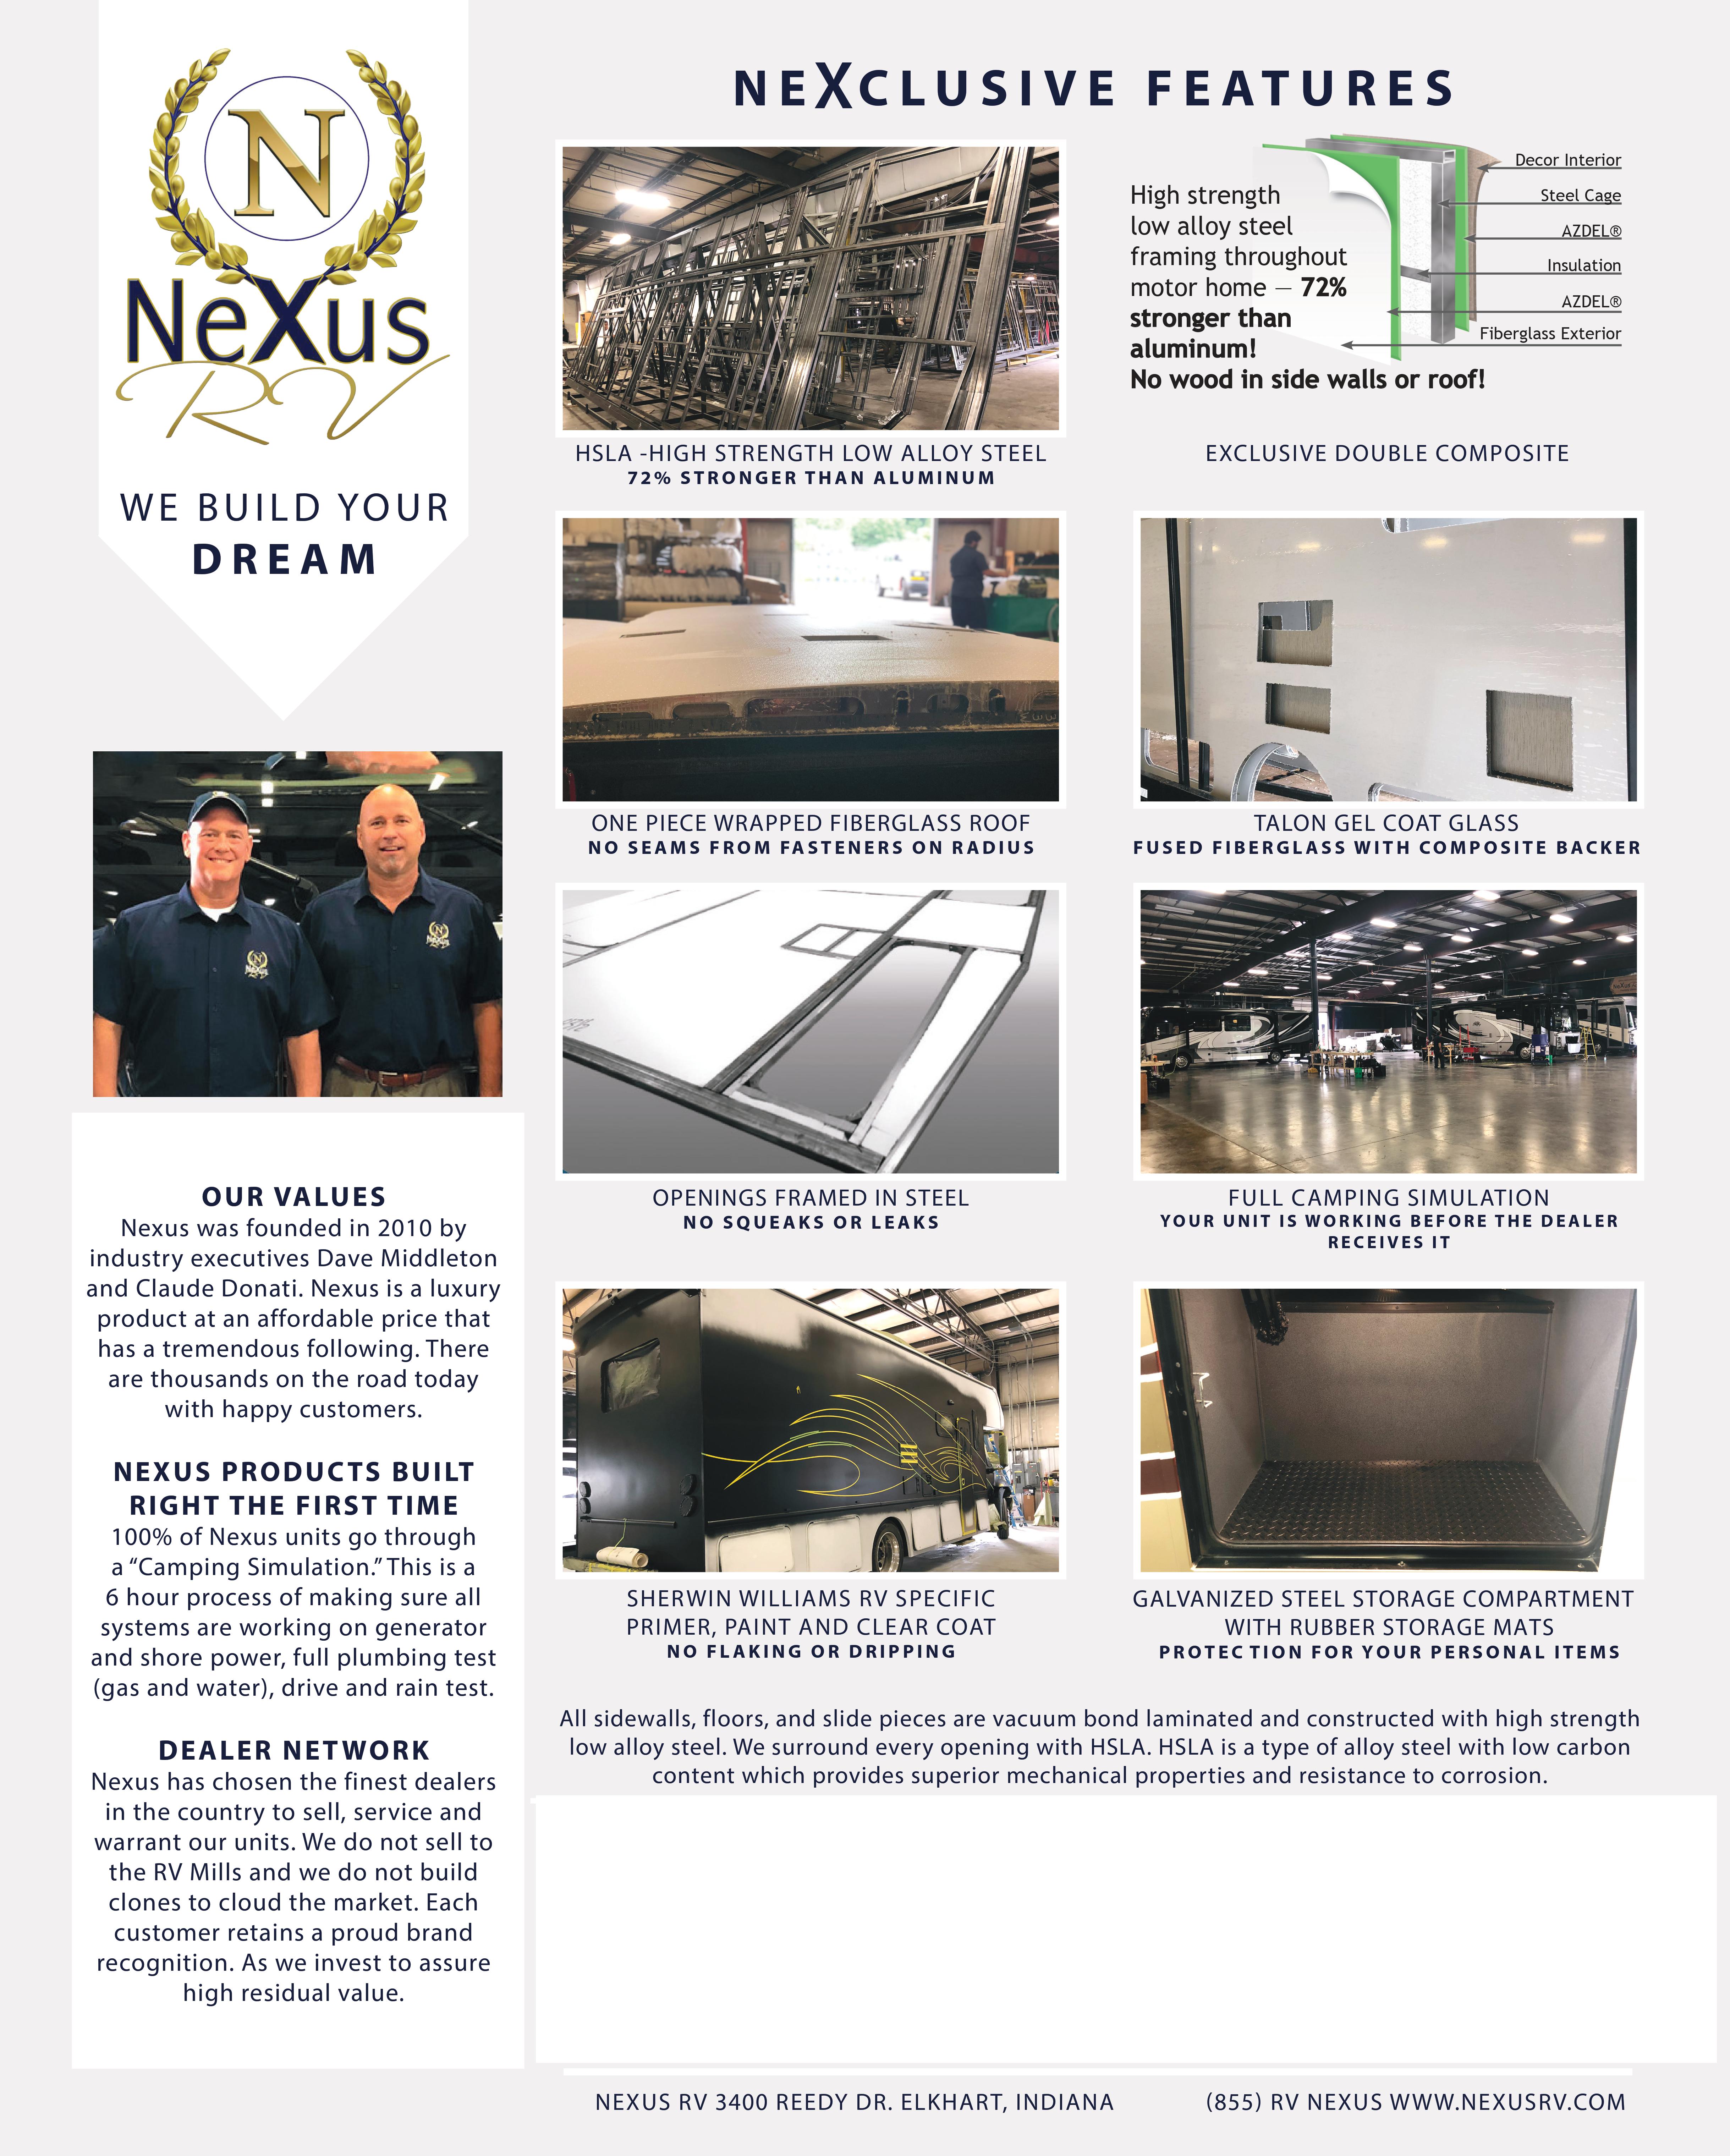 NeXus RV - Nexus RV, class B+, class C, super C, diesel pusher motorhome RVs